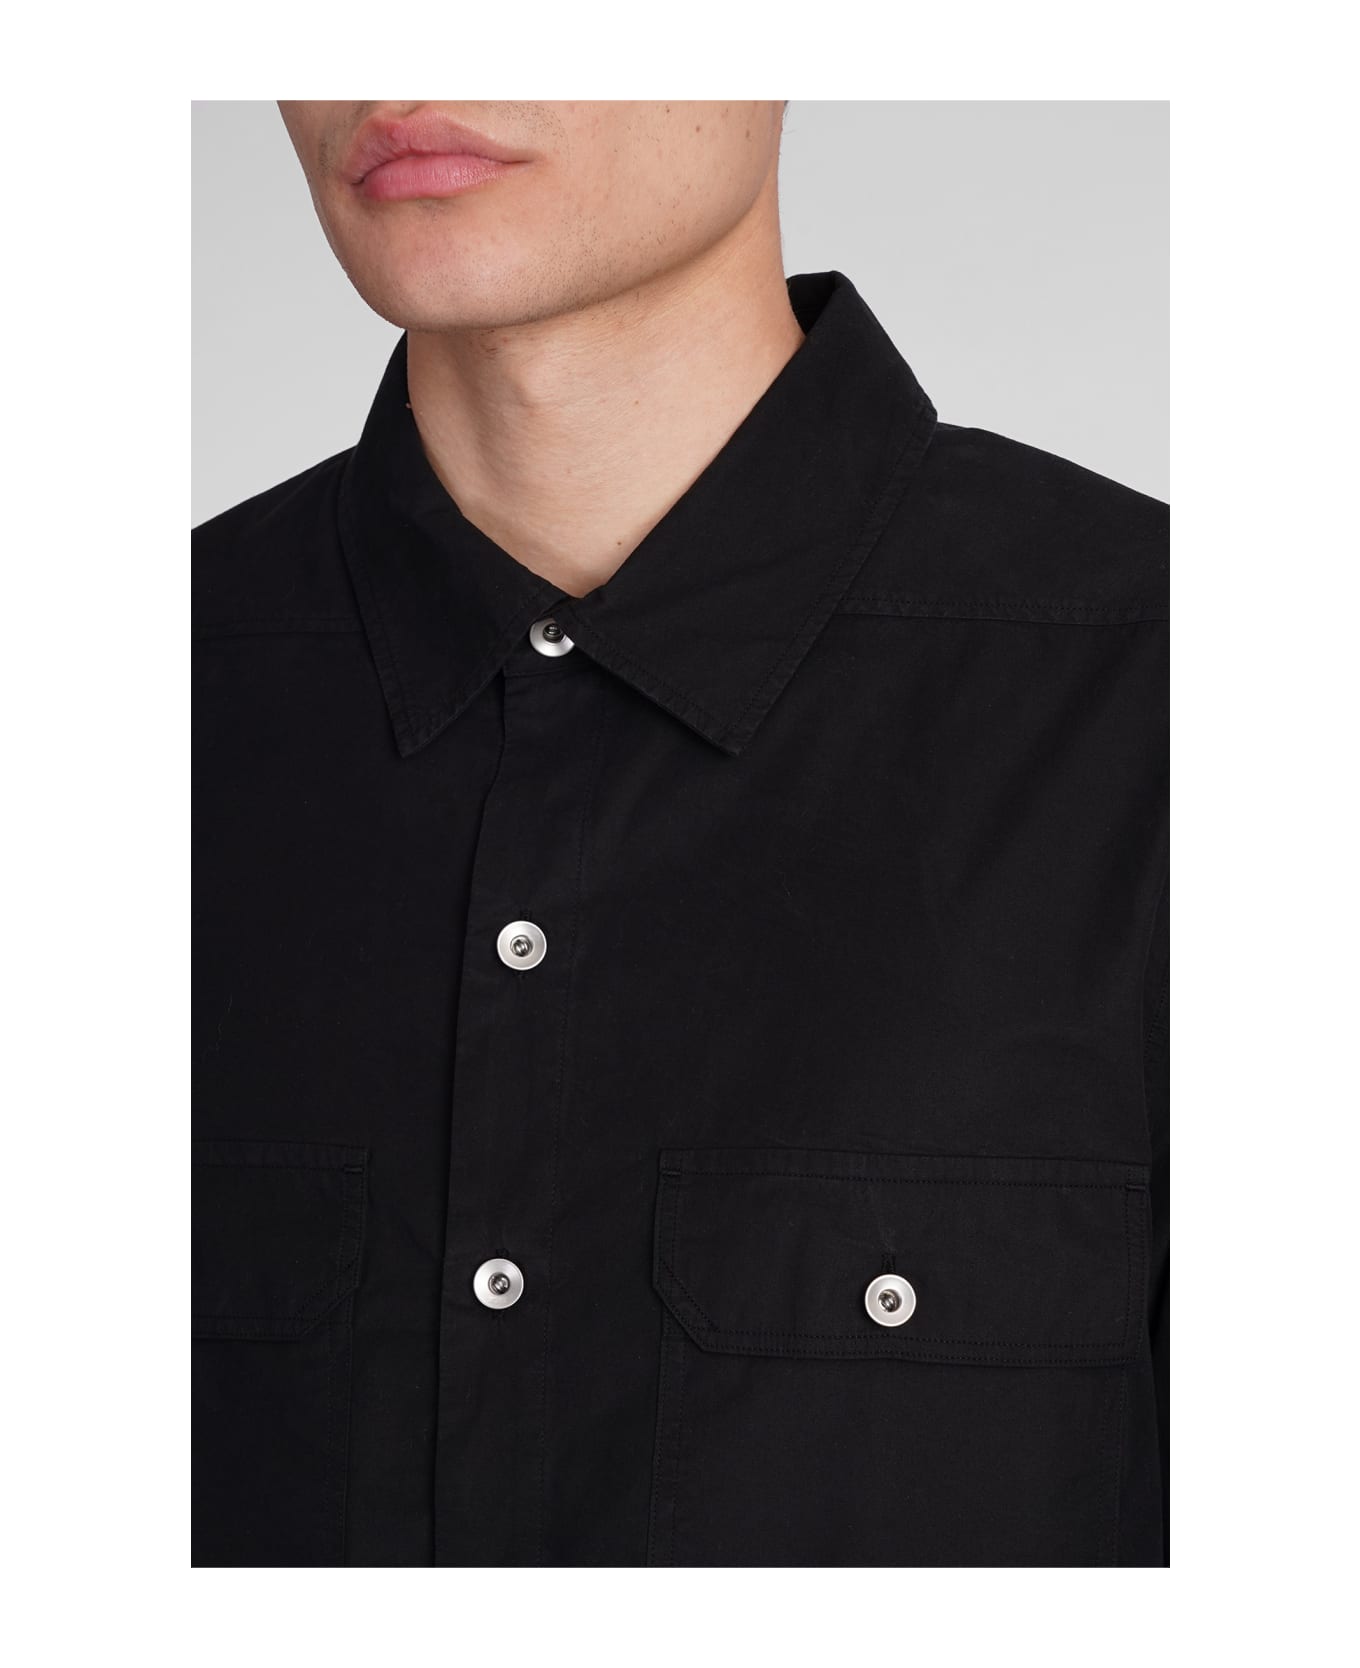 DRKSHDW Outershirt Shirt In Black Cotton - black